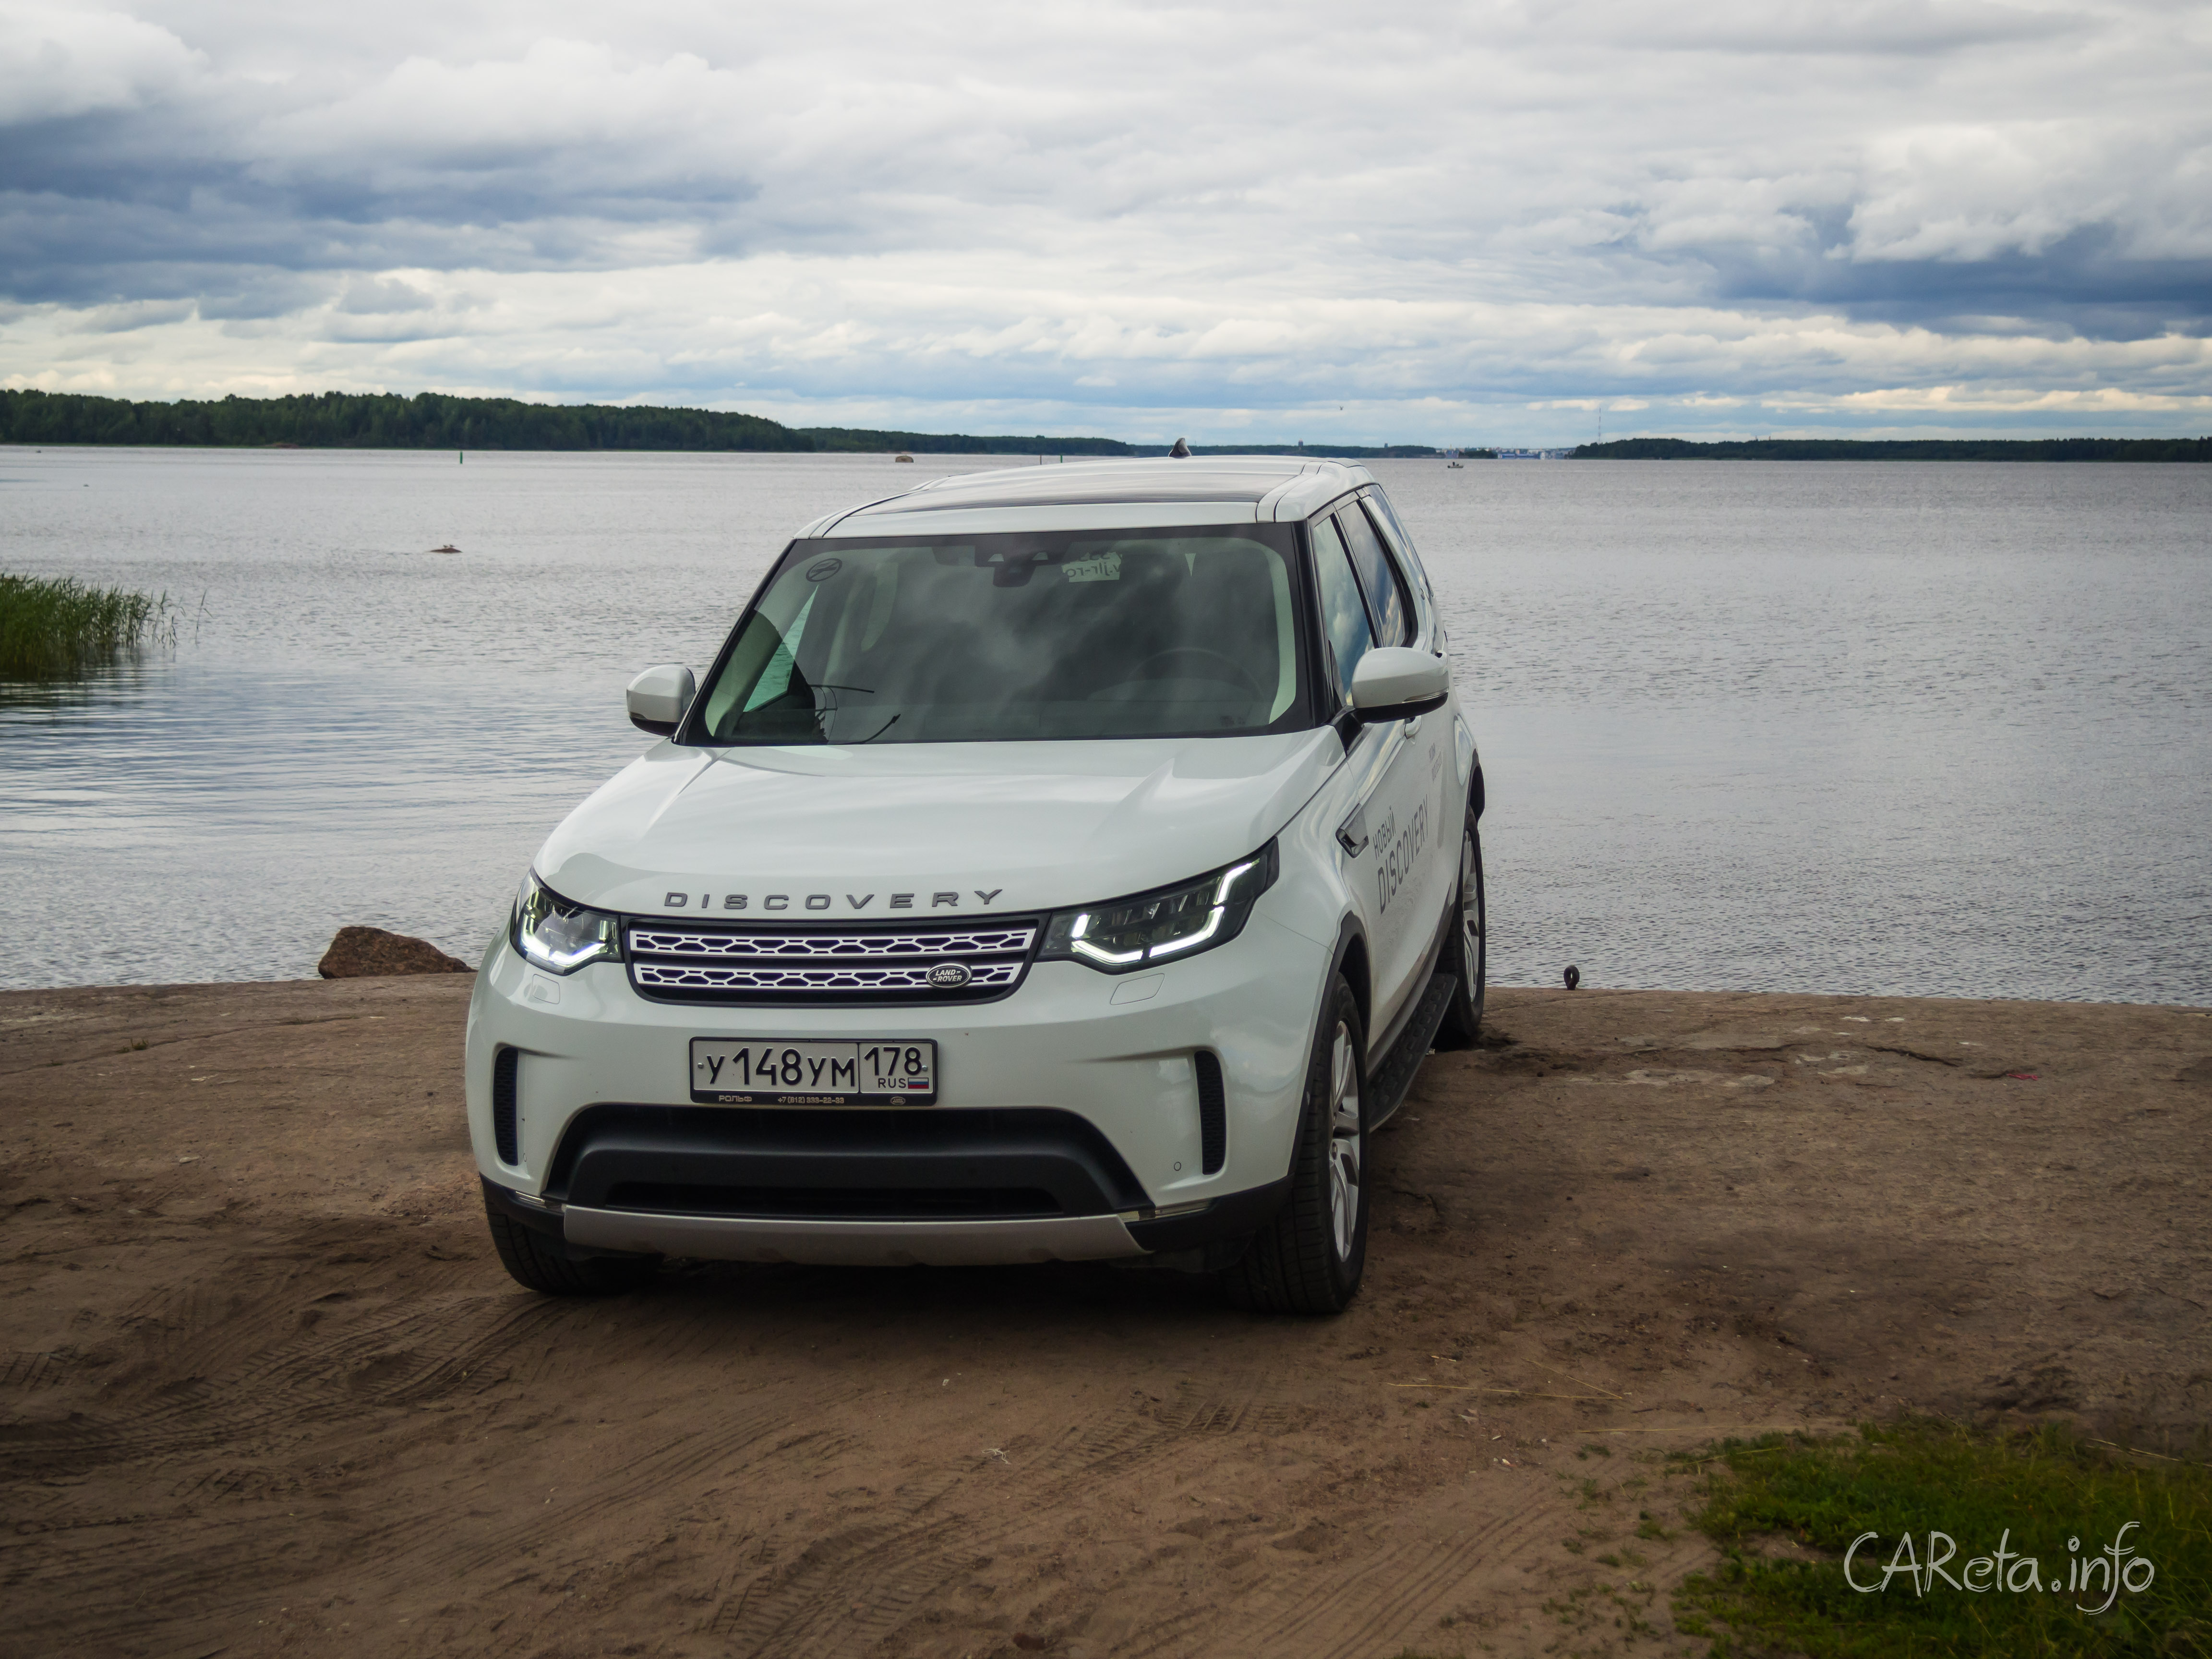 Щегол: тест-драйв Land Rover Discovery 5